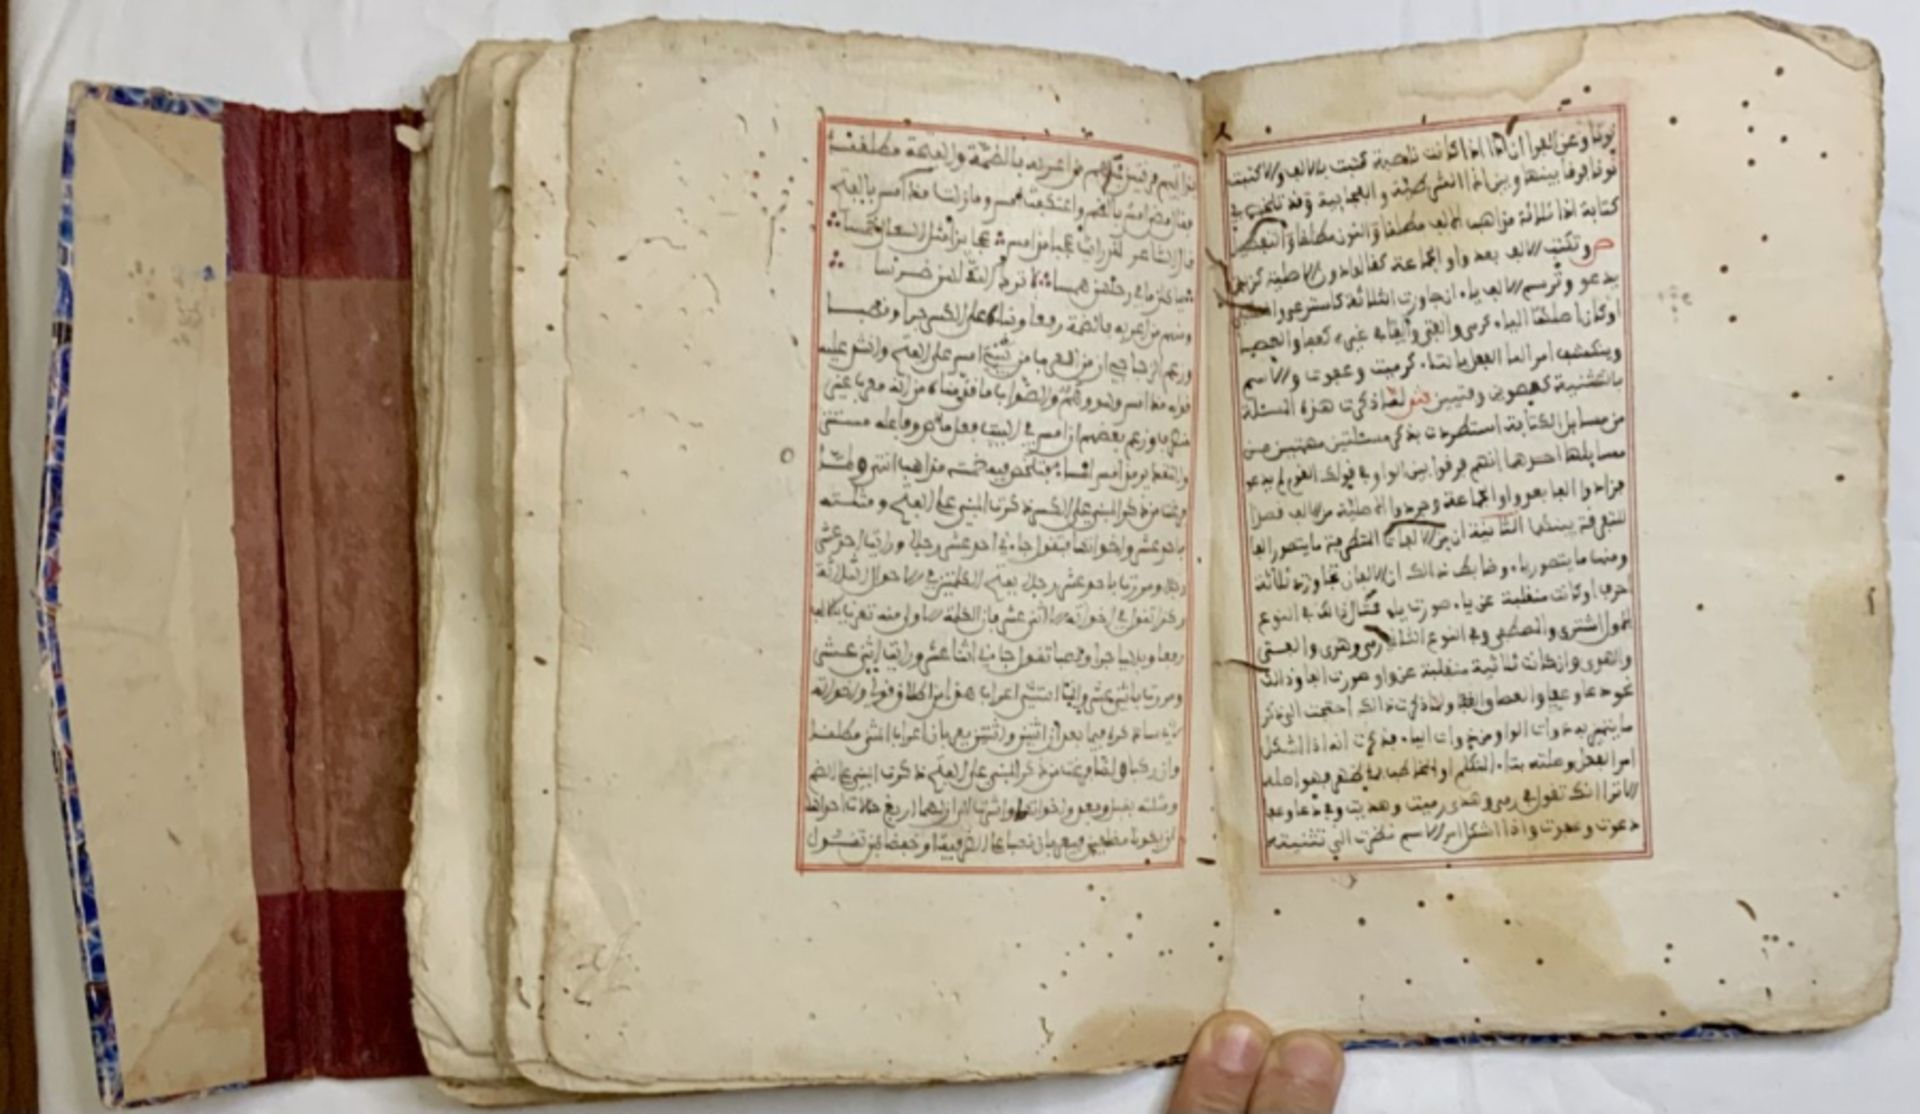 18th century Islamic manuscript on morphology and rhetoric - Image 3 of 18